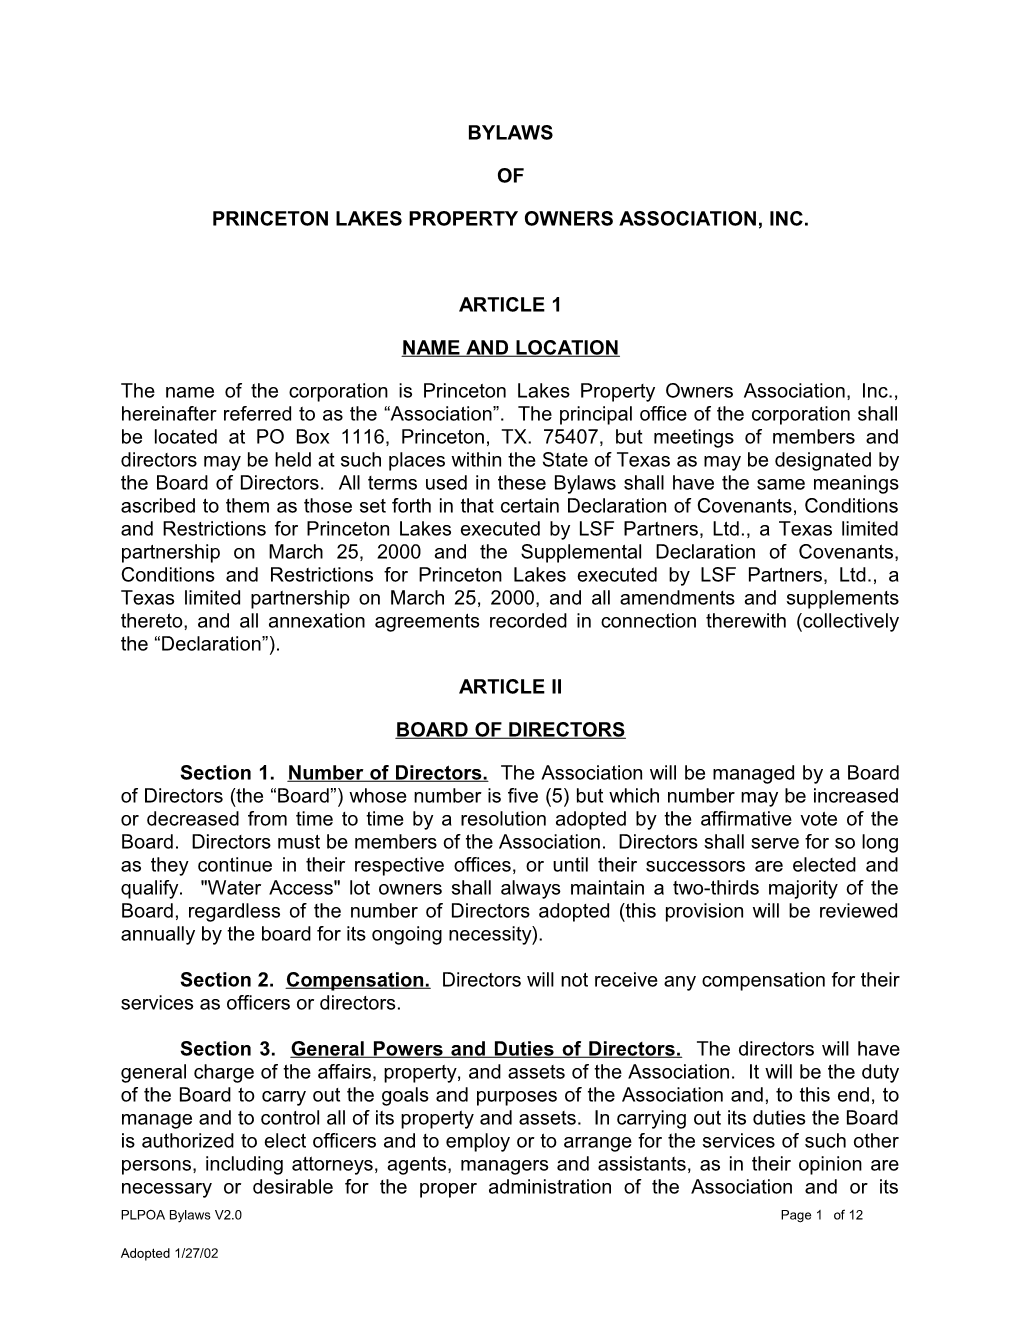 Princeton Lakes Property Owners Association, Inc